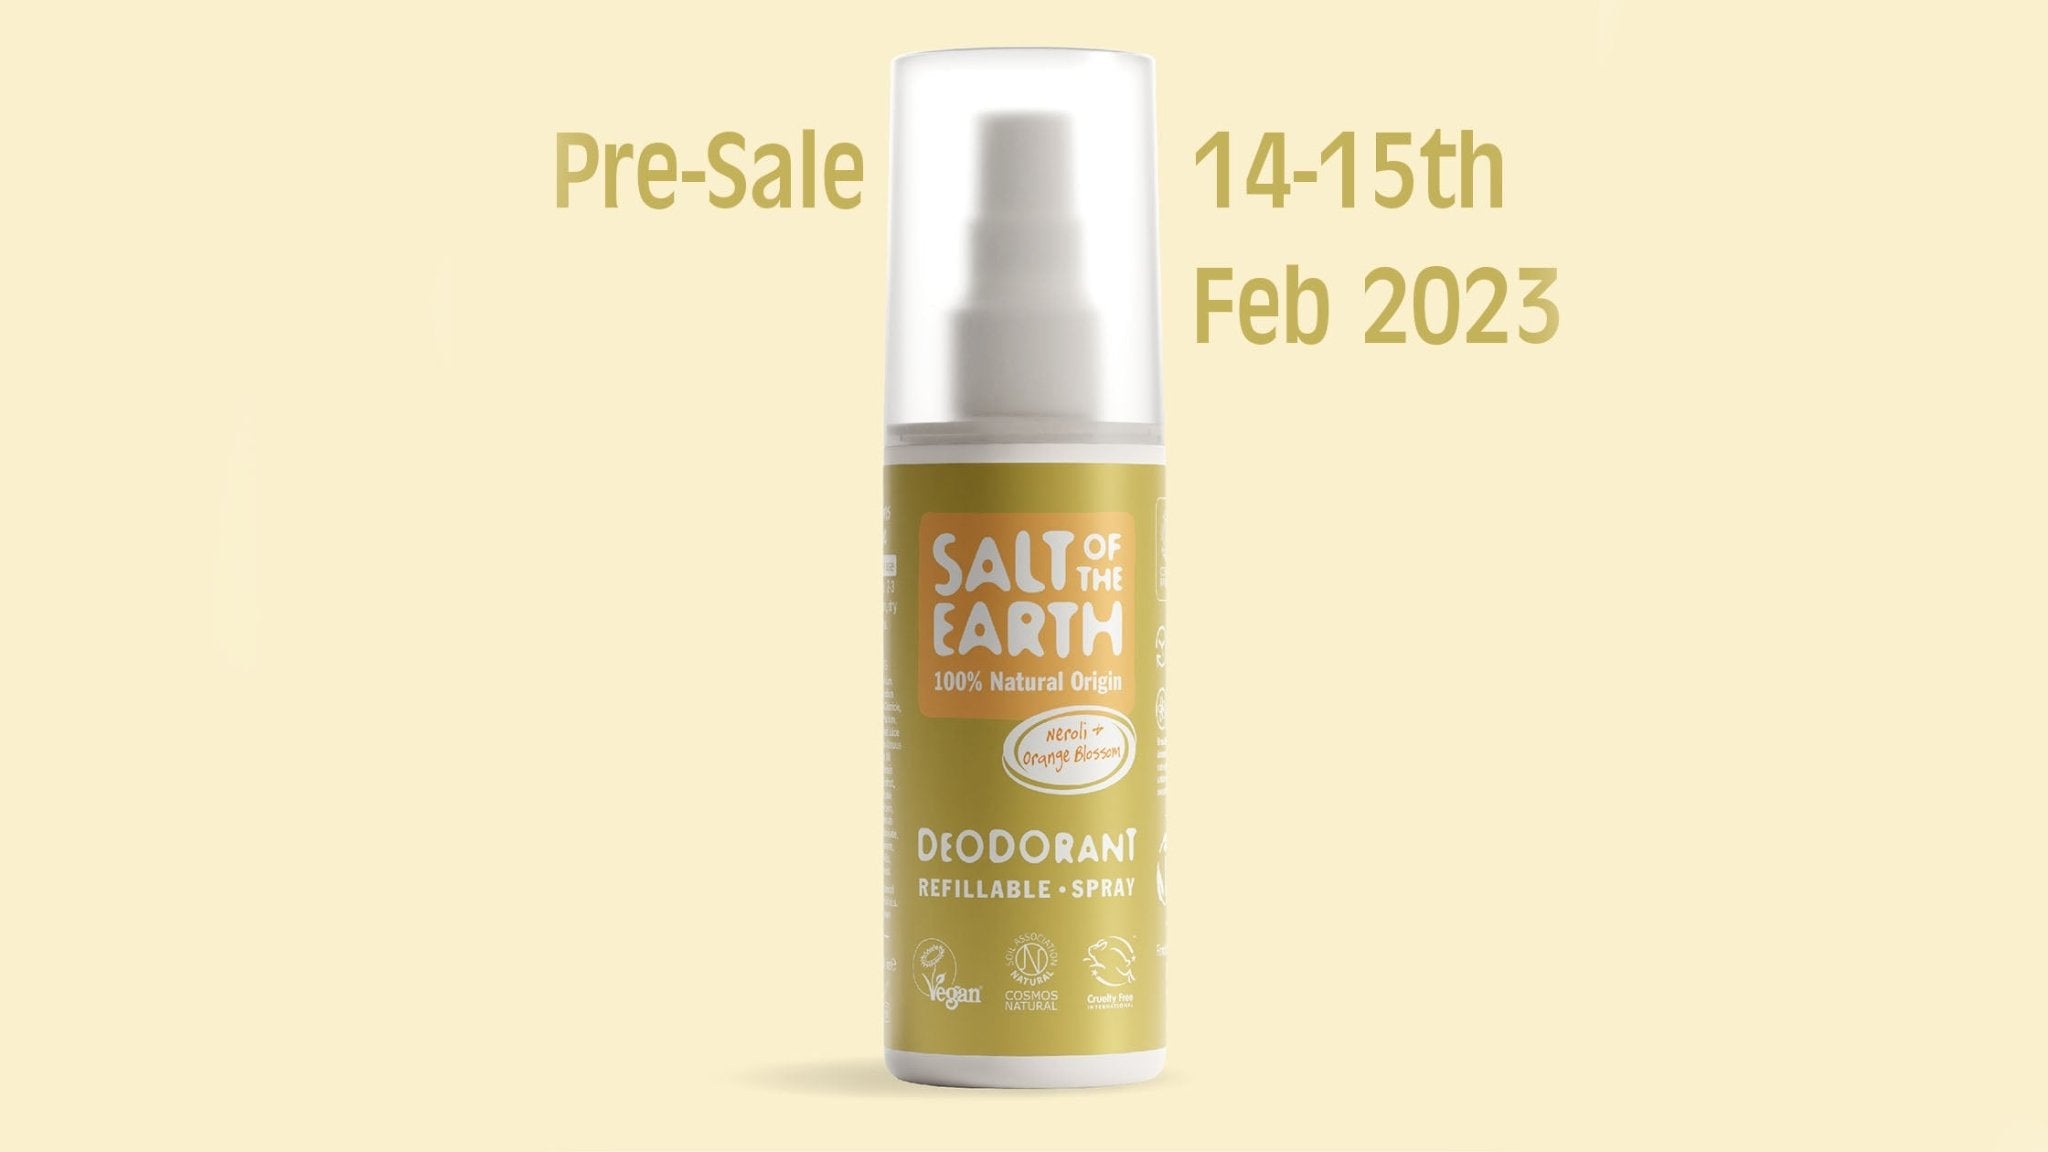 Introducing Salt of the Earth's Neroli & Orange Blossom Natural Deodorant Spray: Pre-Sale Now Open! - Salt of the Earth Natural Deodorants